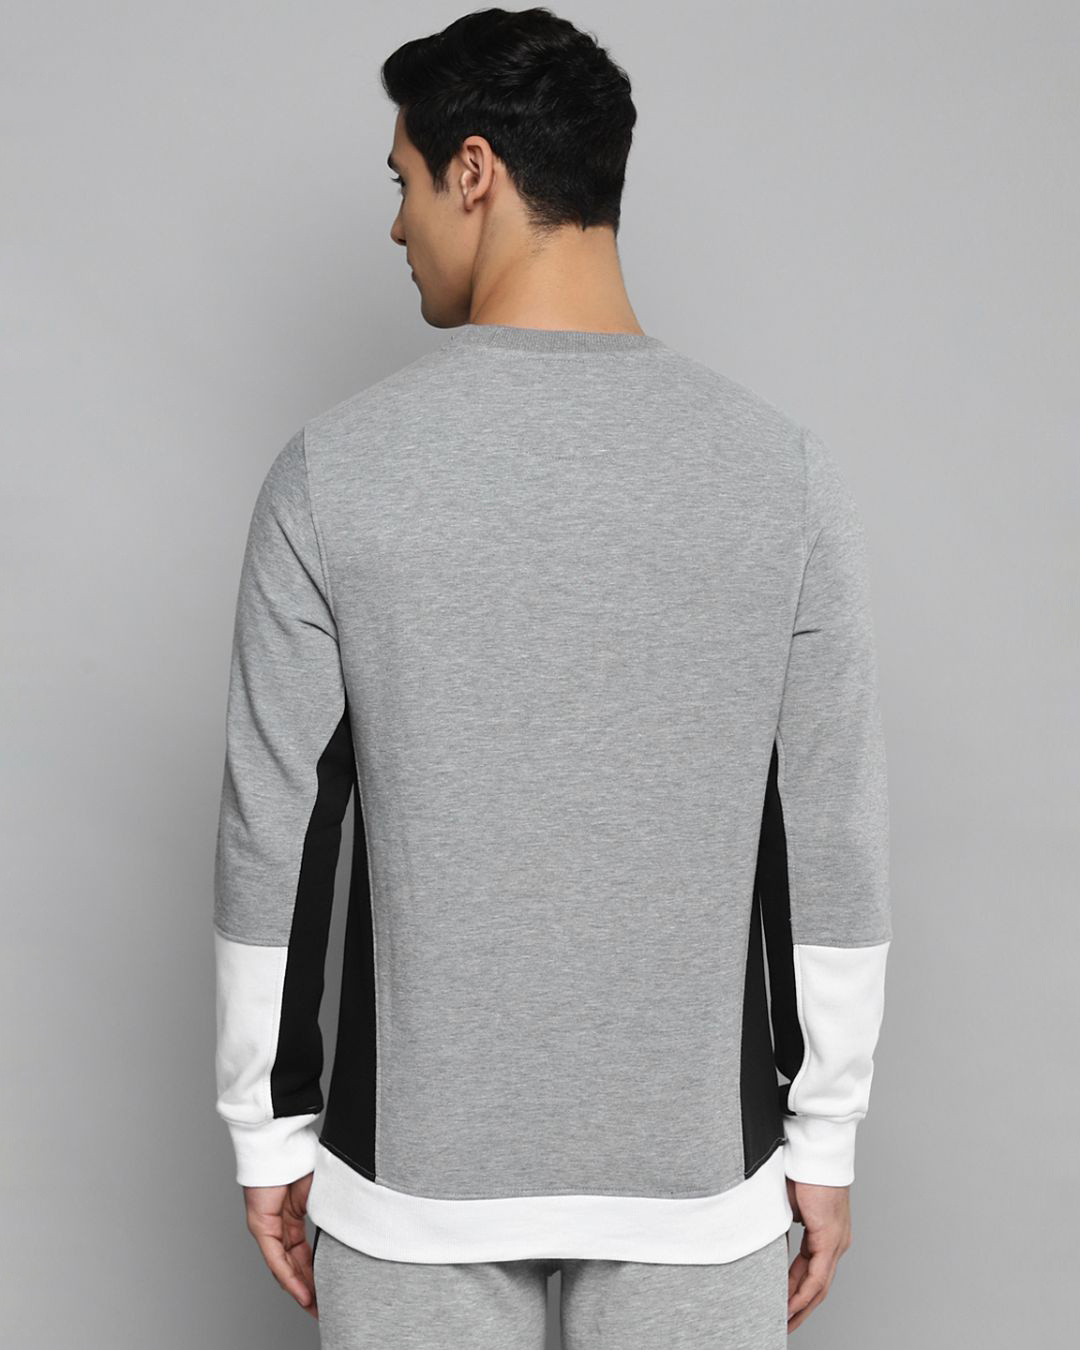 Shop Men Grey Color Block Slim Fit Sweatshirt-Back